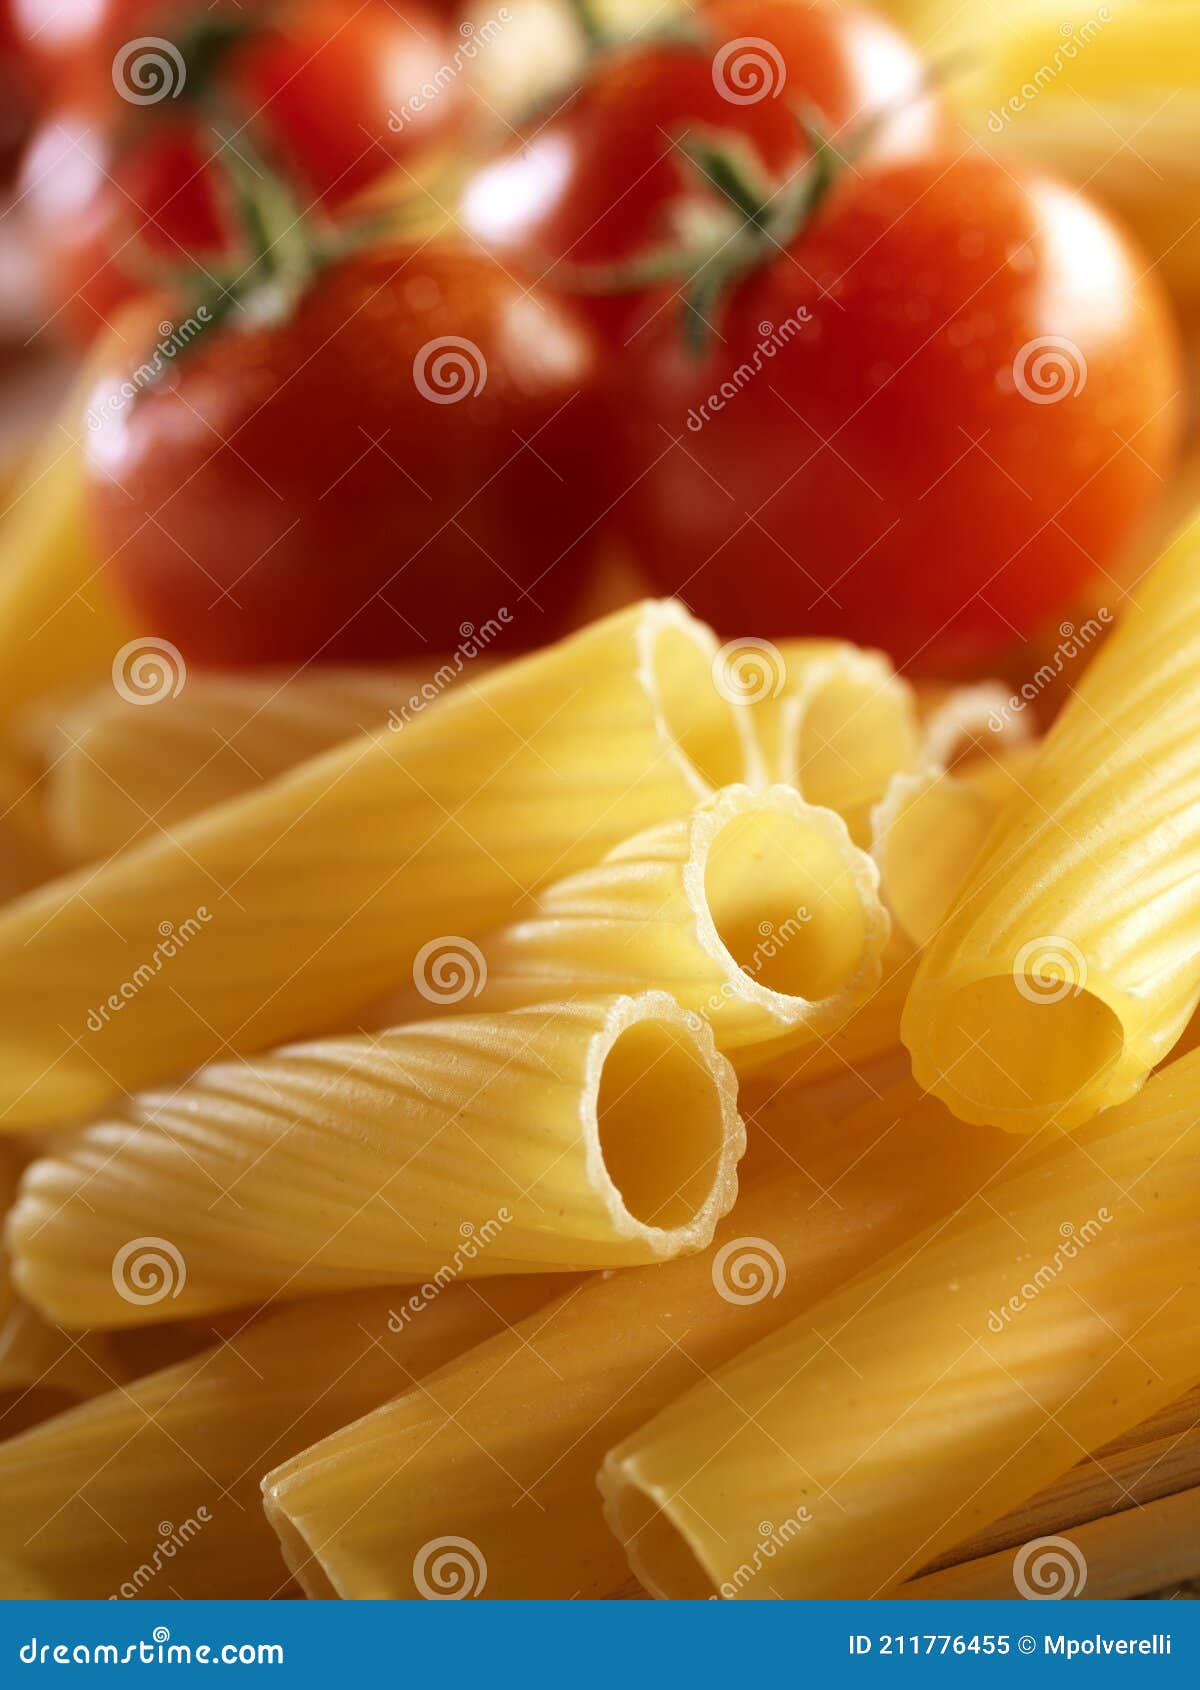 unckoked pasta on white background with tomato